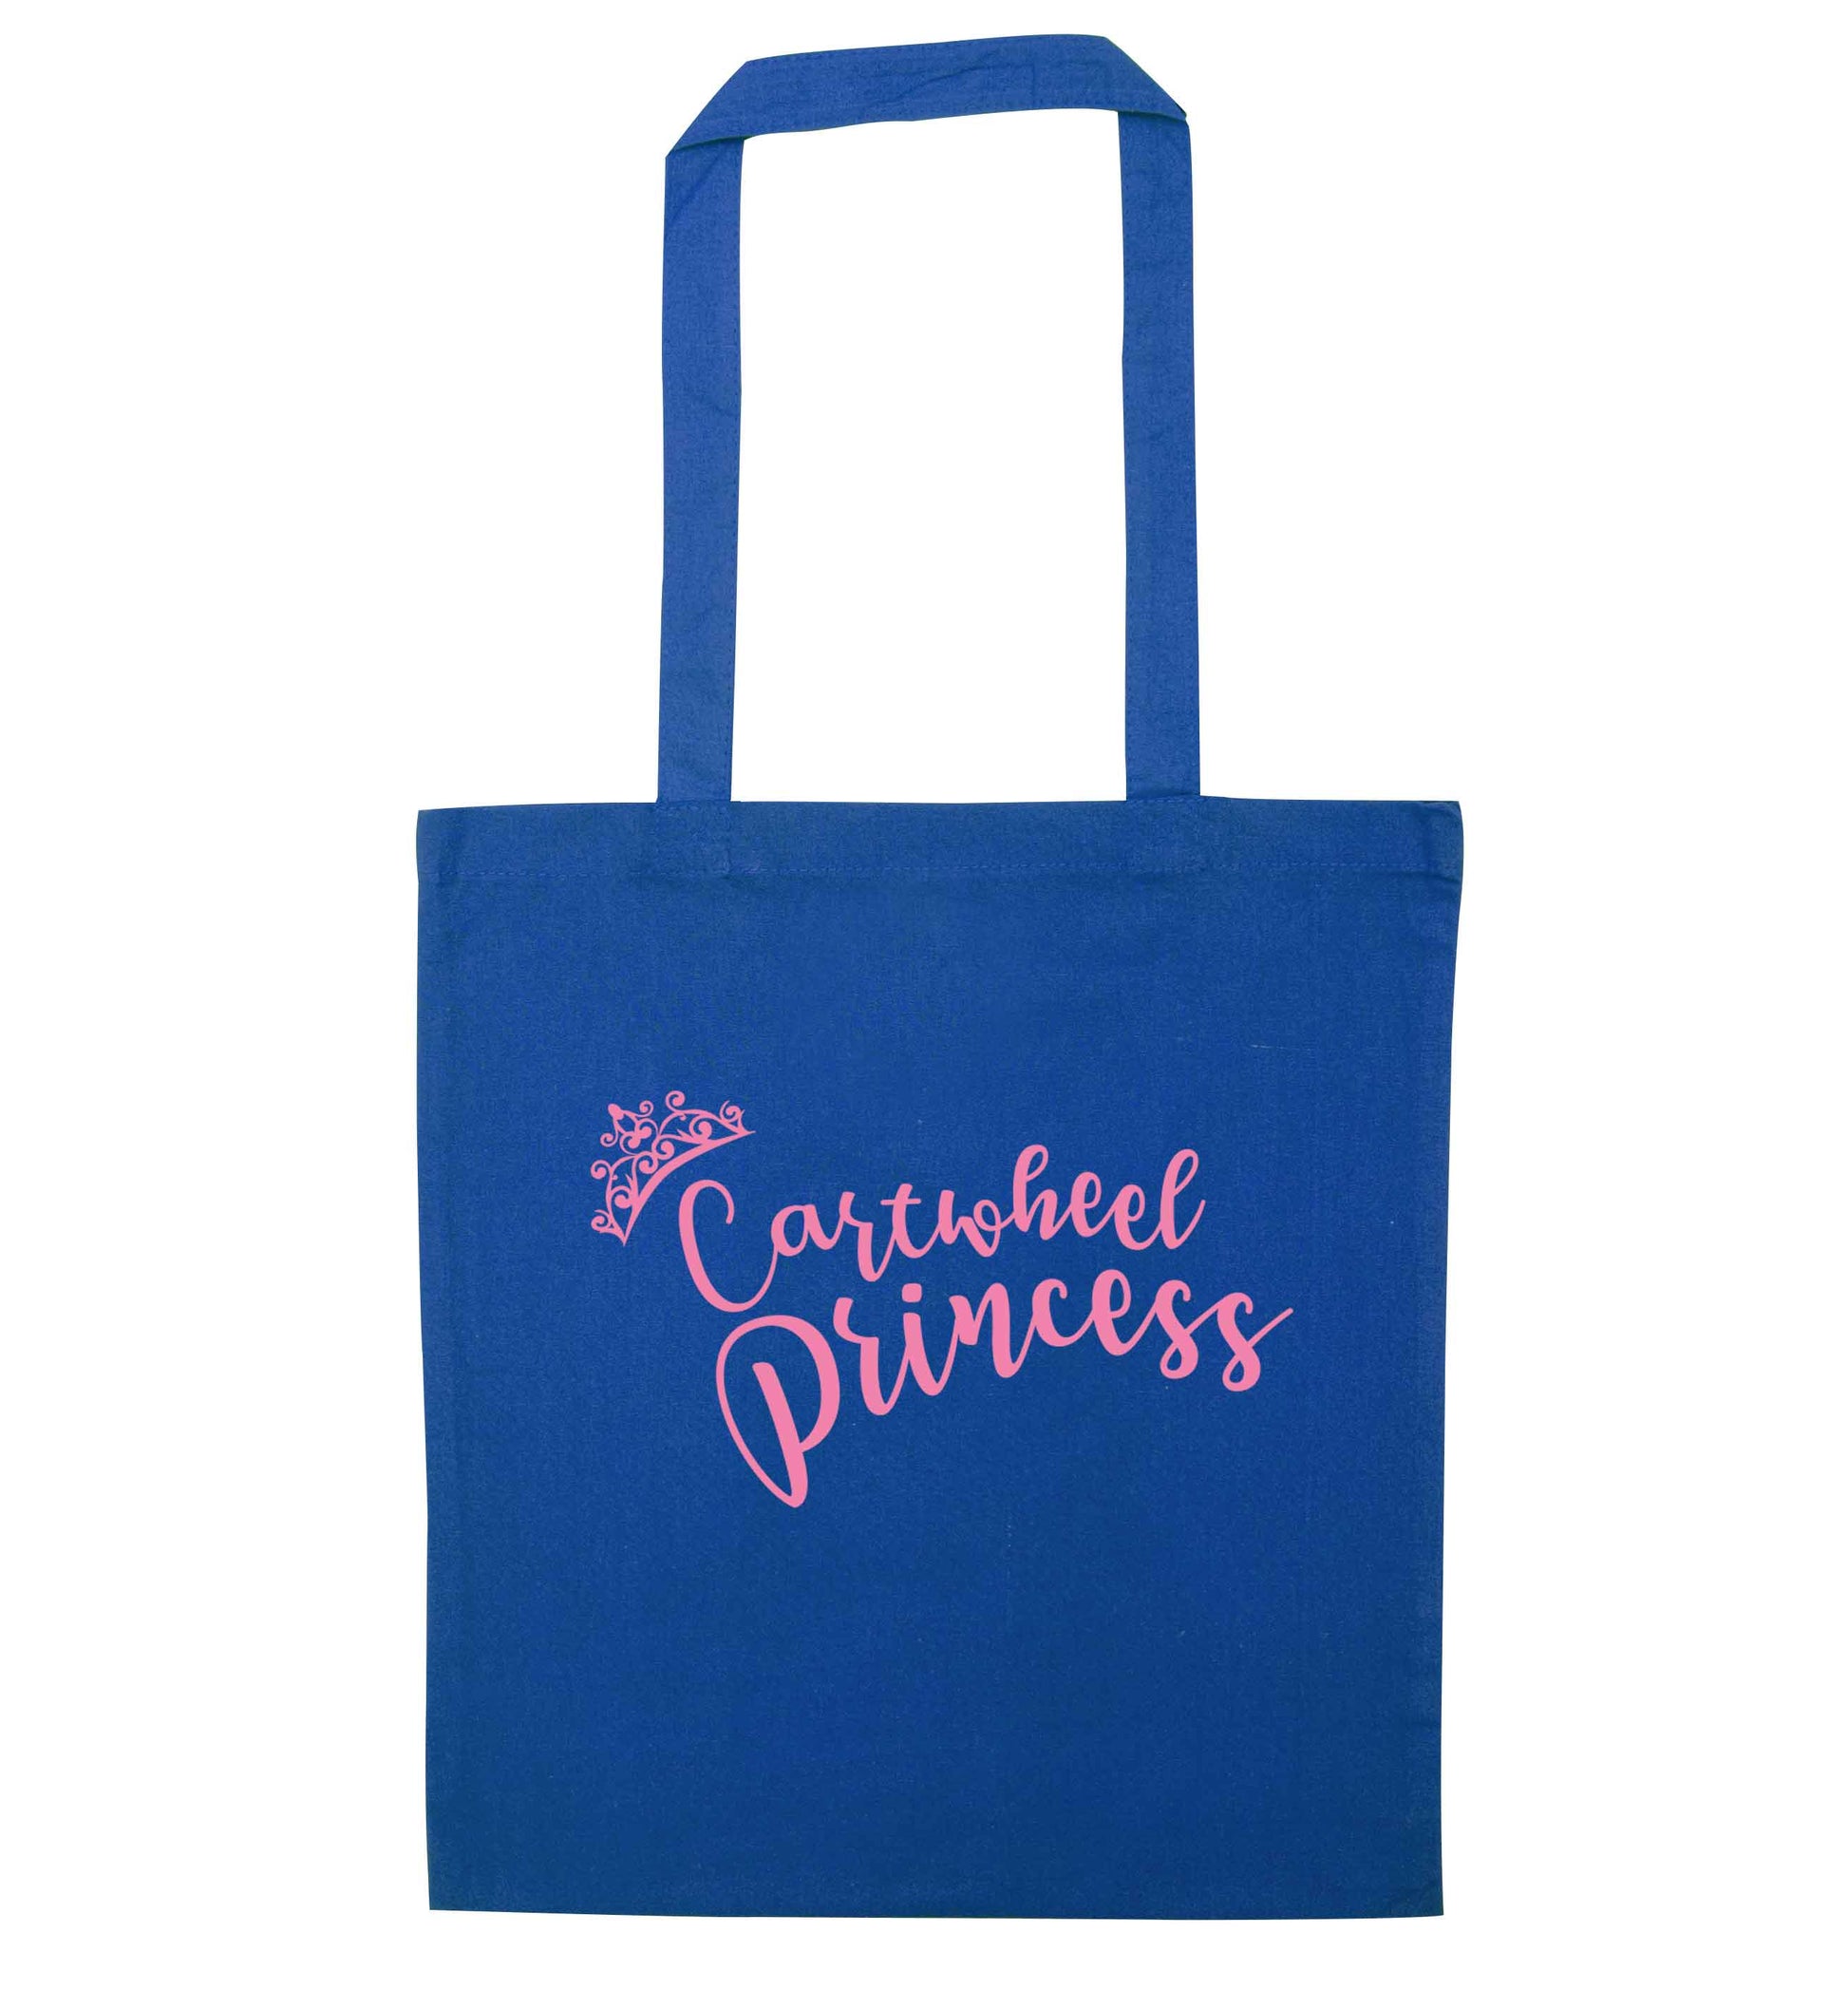 Cartwheel princess blue tote bag